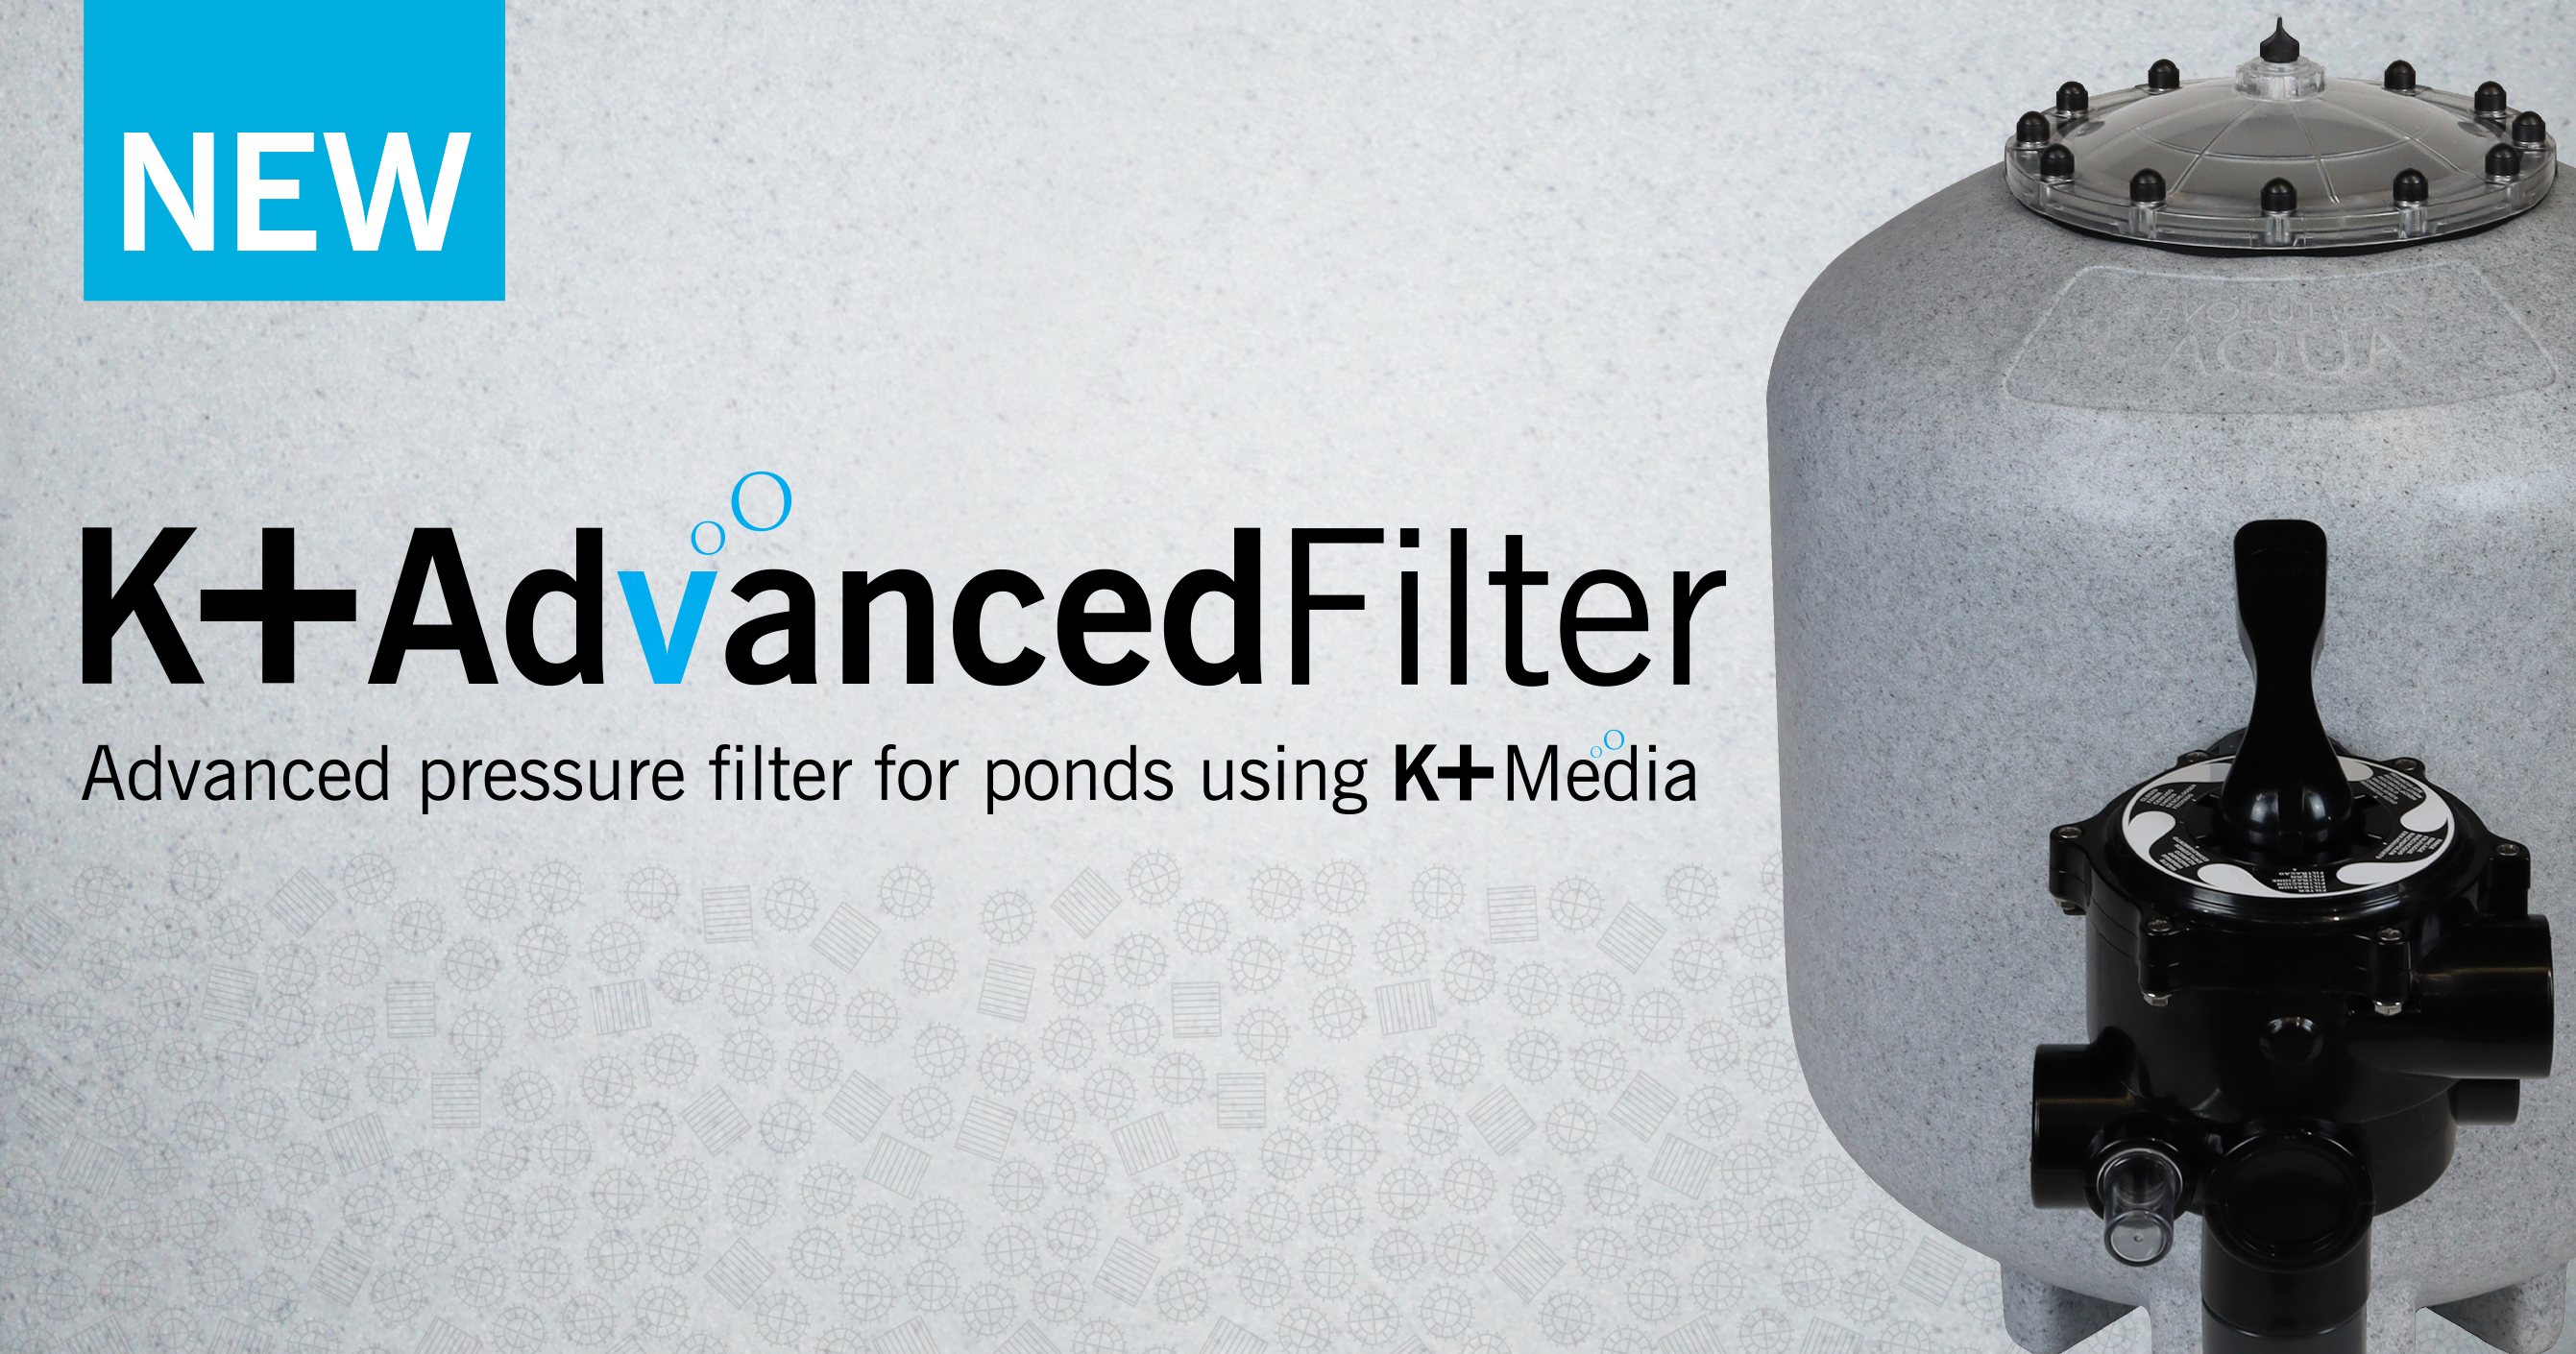 NEW pressure filter K+ Advanced Filter